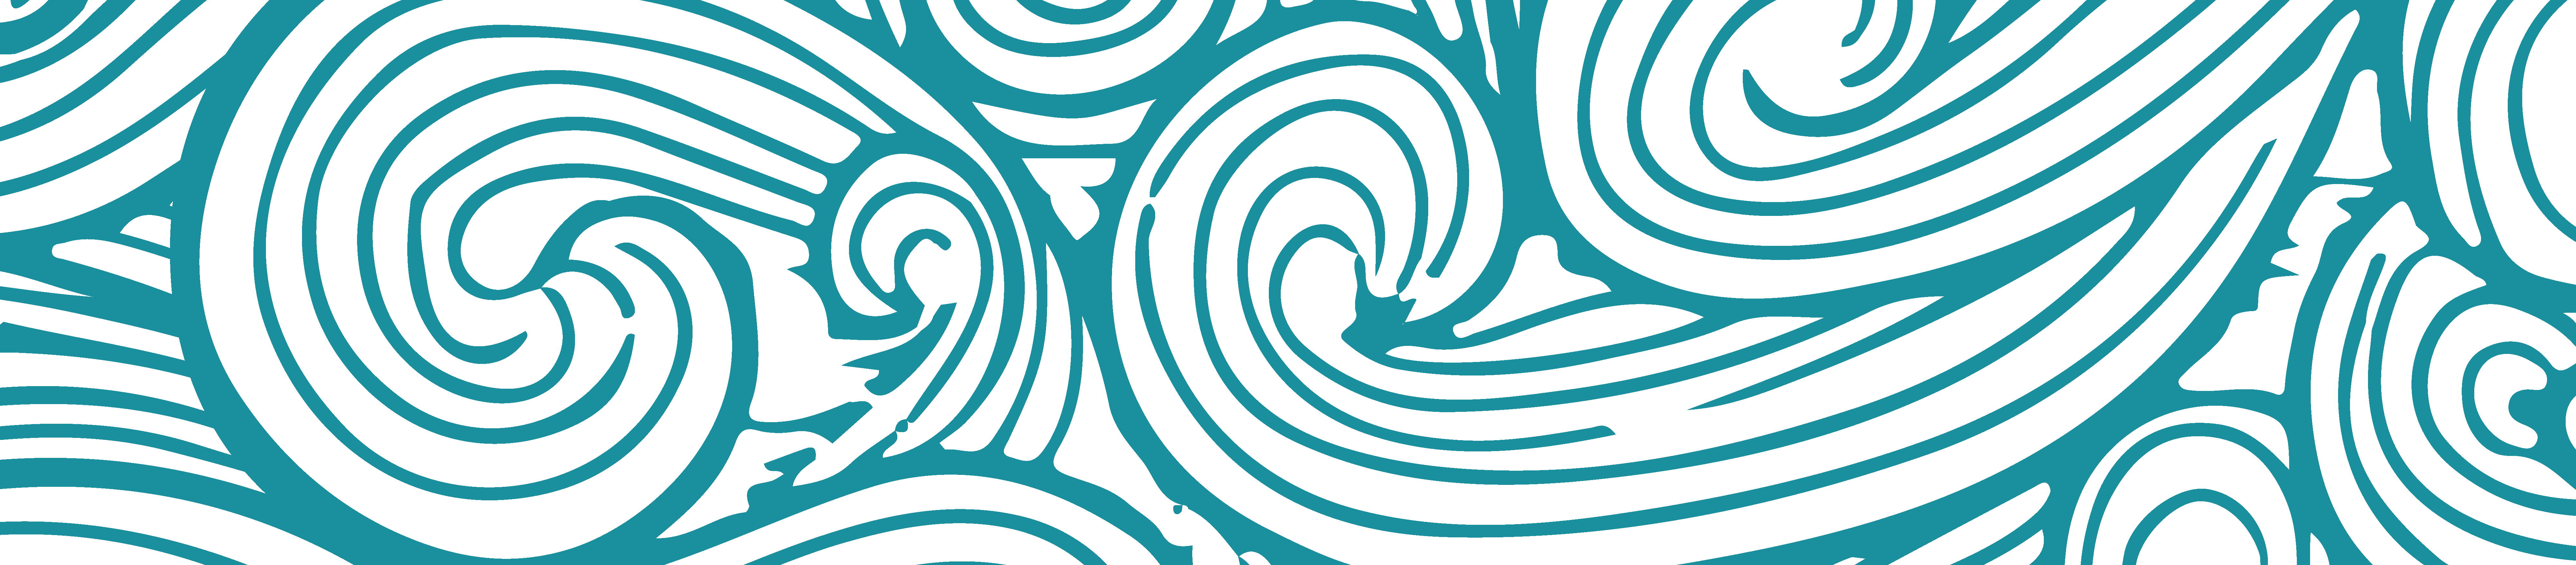 Blue sea wave graphic